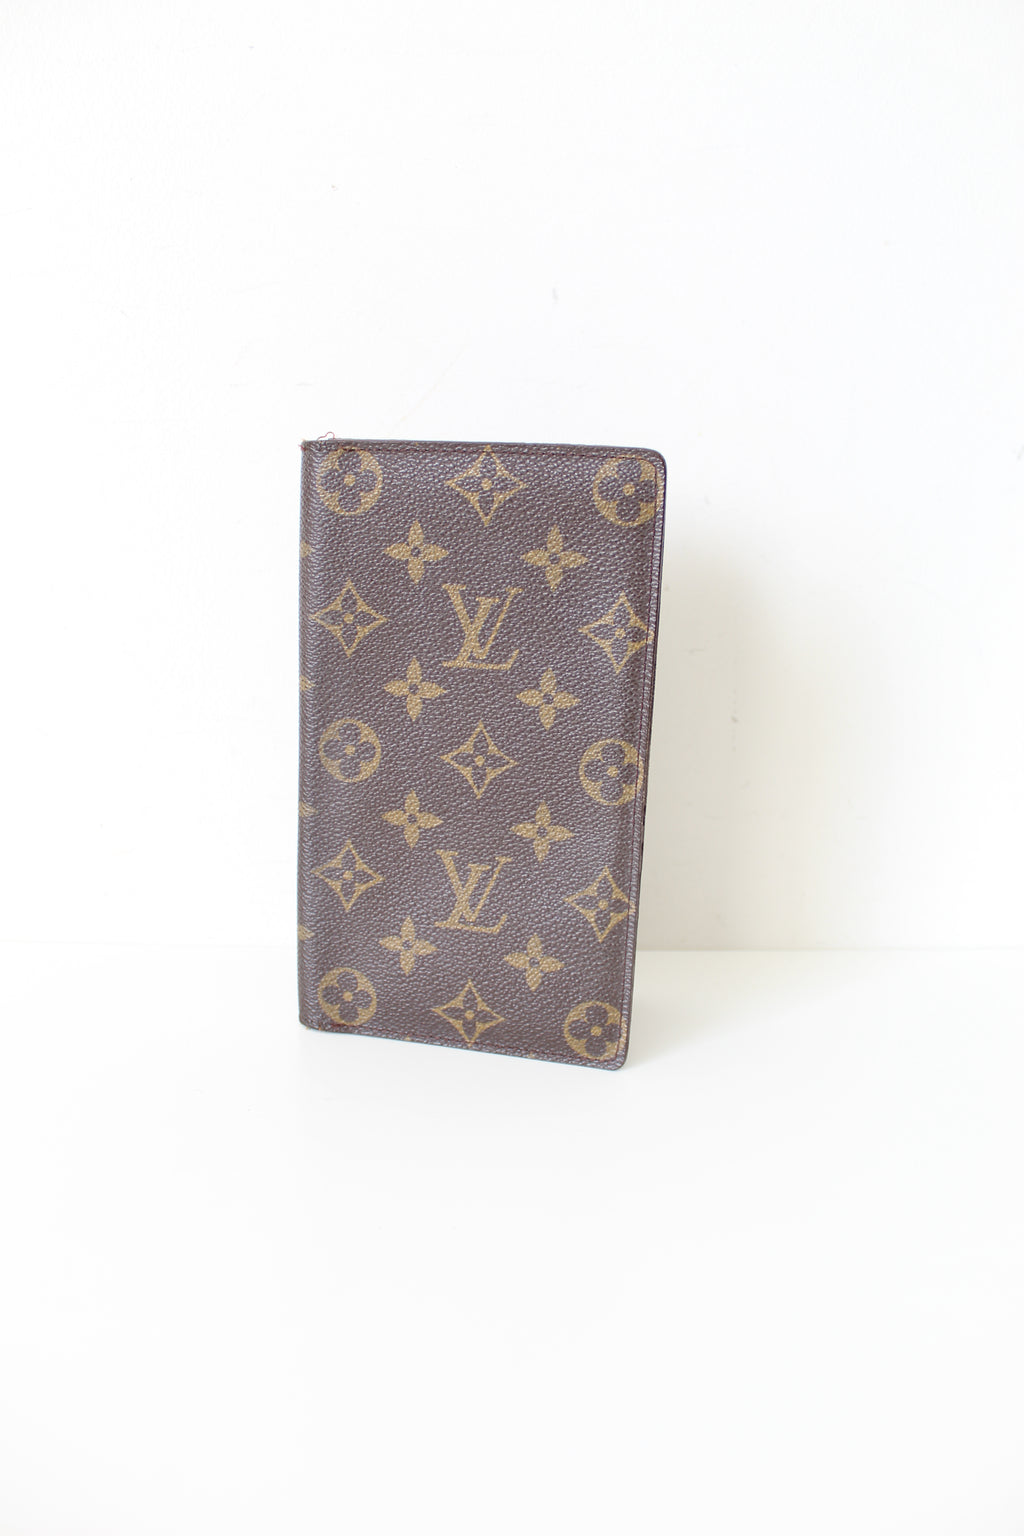 Vintage Louis Vuitton Monogram Wallet 